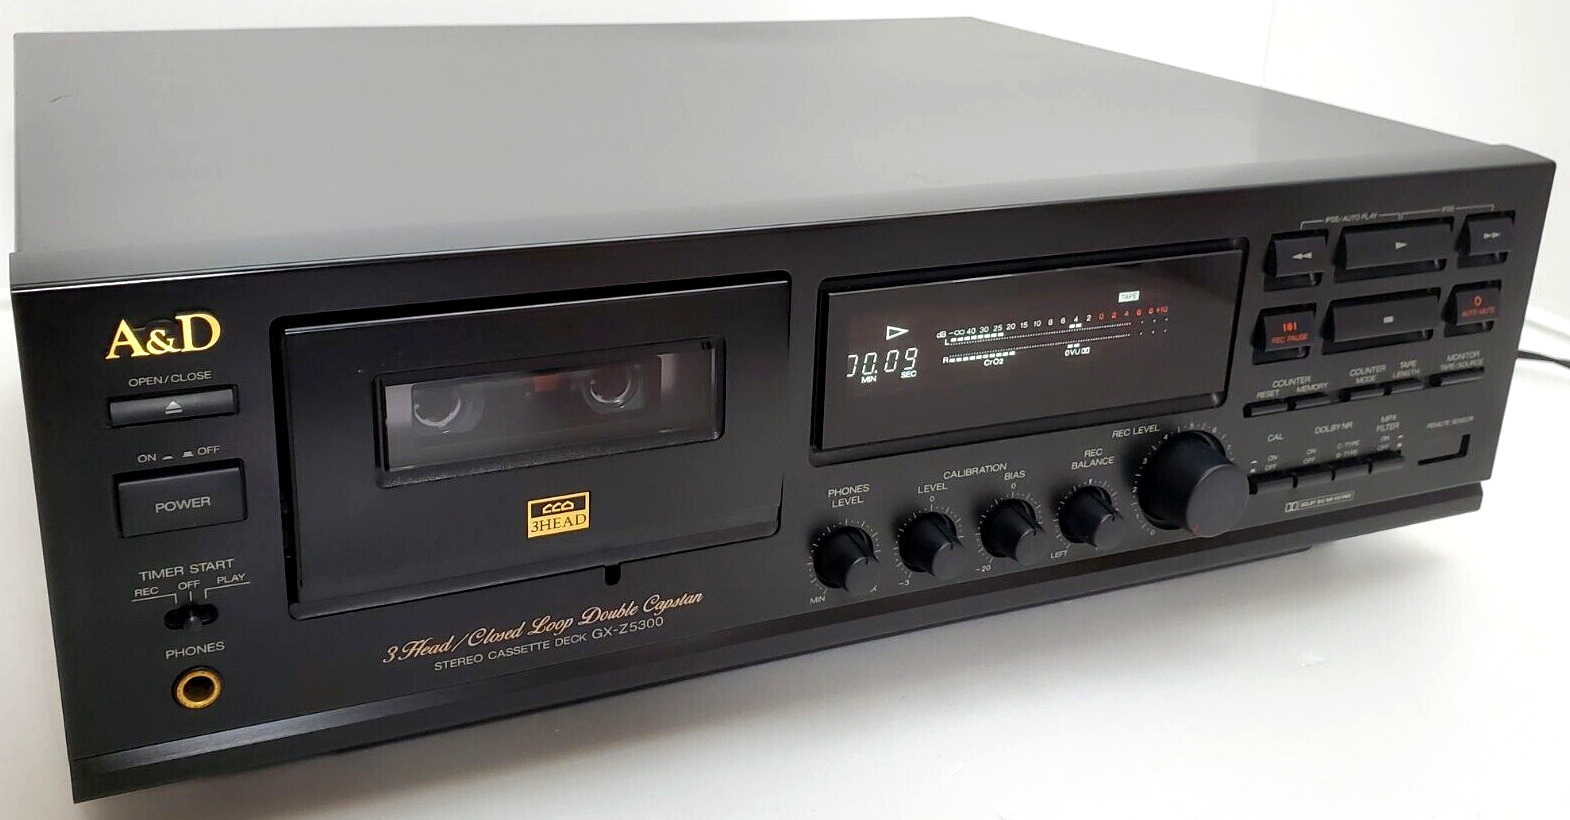 Стереокассетная дека A&D AKAI Diatone GX-Z5300 с 3 головками, 100 В-Япония-1991-год